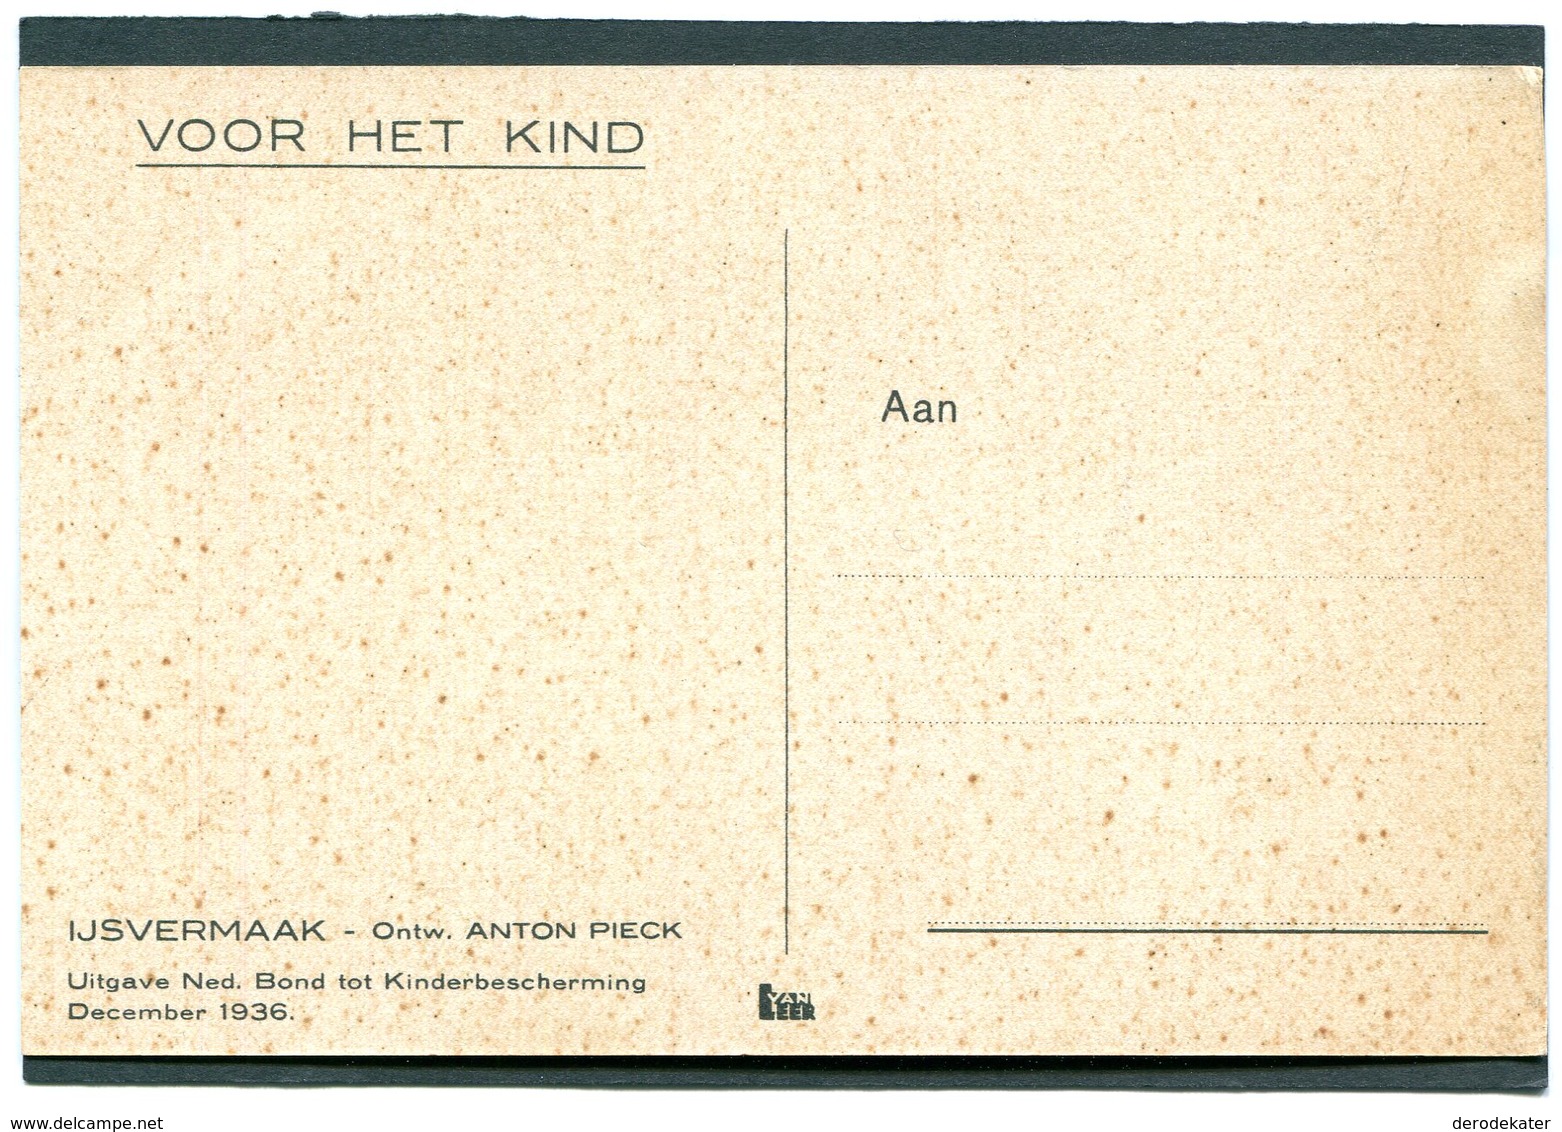 ANTON PIECK VOOR HET KIND IJSVERMAAK 1936.Vintage Post Card Pieck.Traineau Antique.Arreslee.Sleigh.Unwritten.Nice! - Pieck, Anton